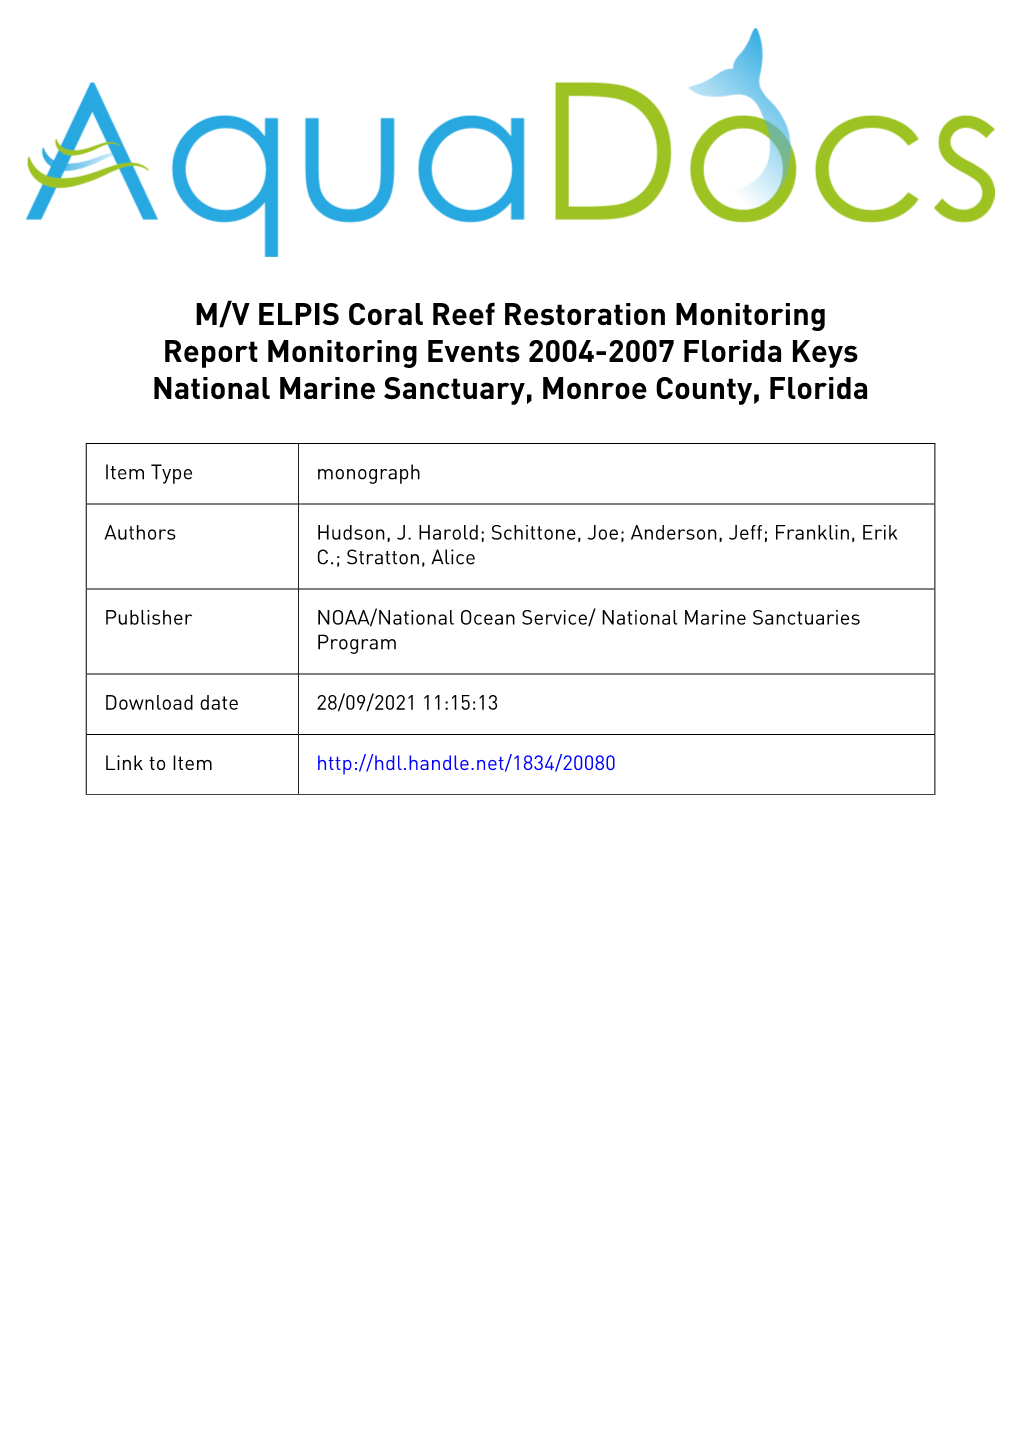 M/V ELPIS Coral Reef Restoration Monitoring Report Monitoring Events 2004-2007 Florida Keys National Marine Sanctuary, Monroe County, Florida